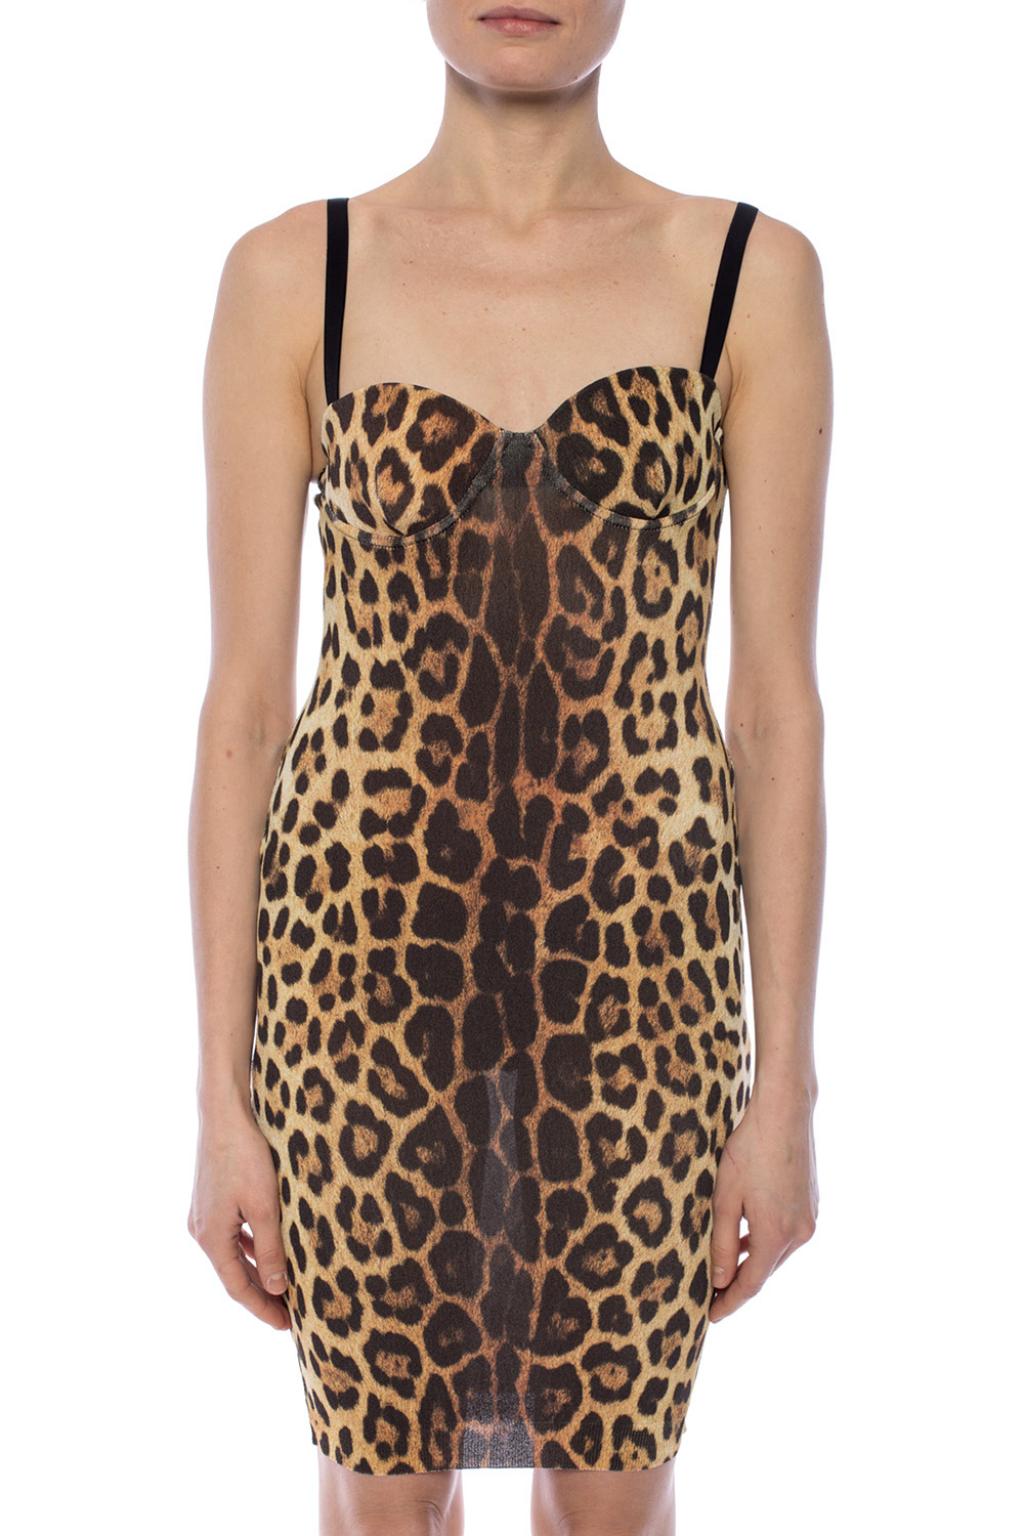 moschino leopard dress